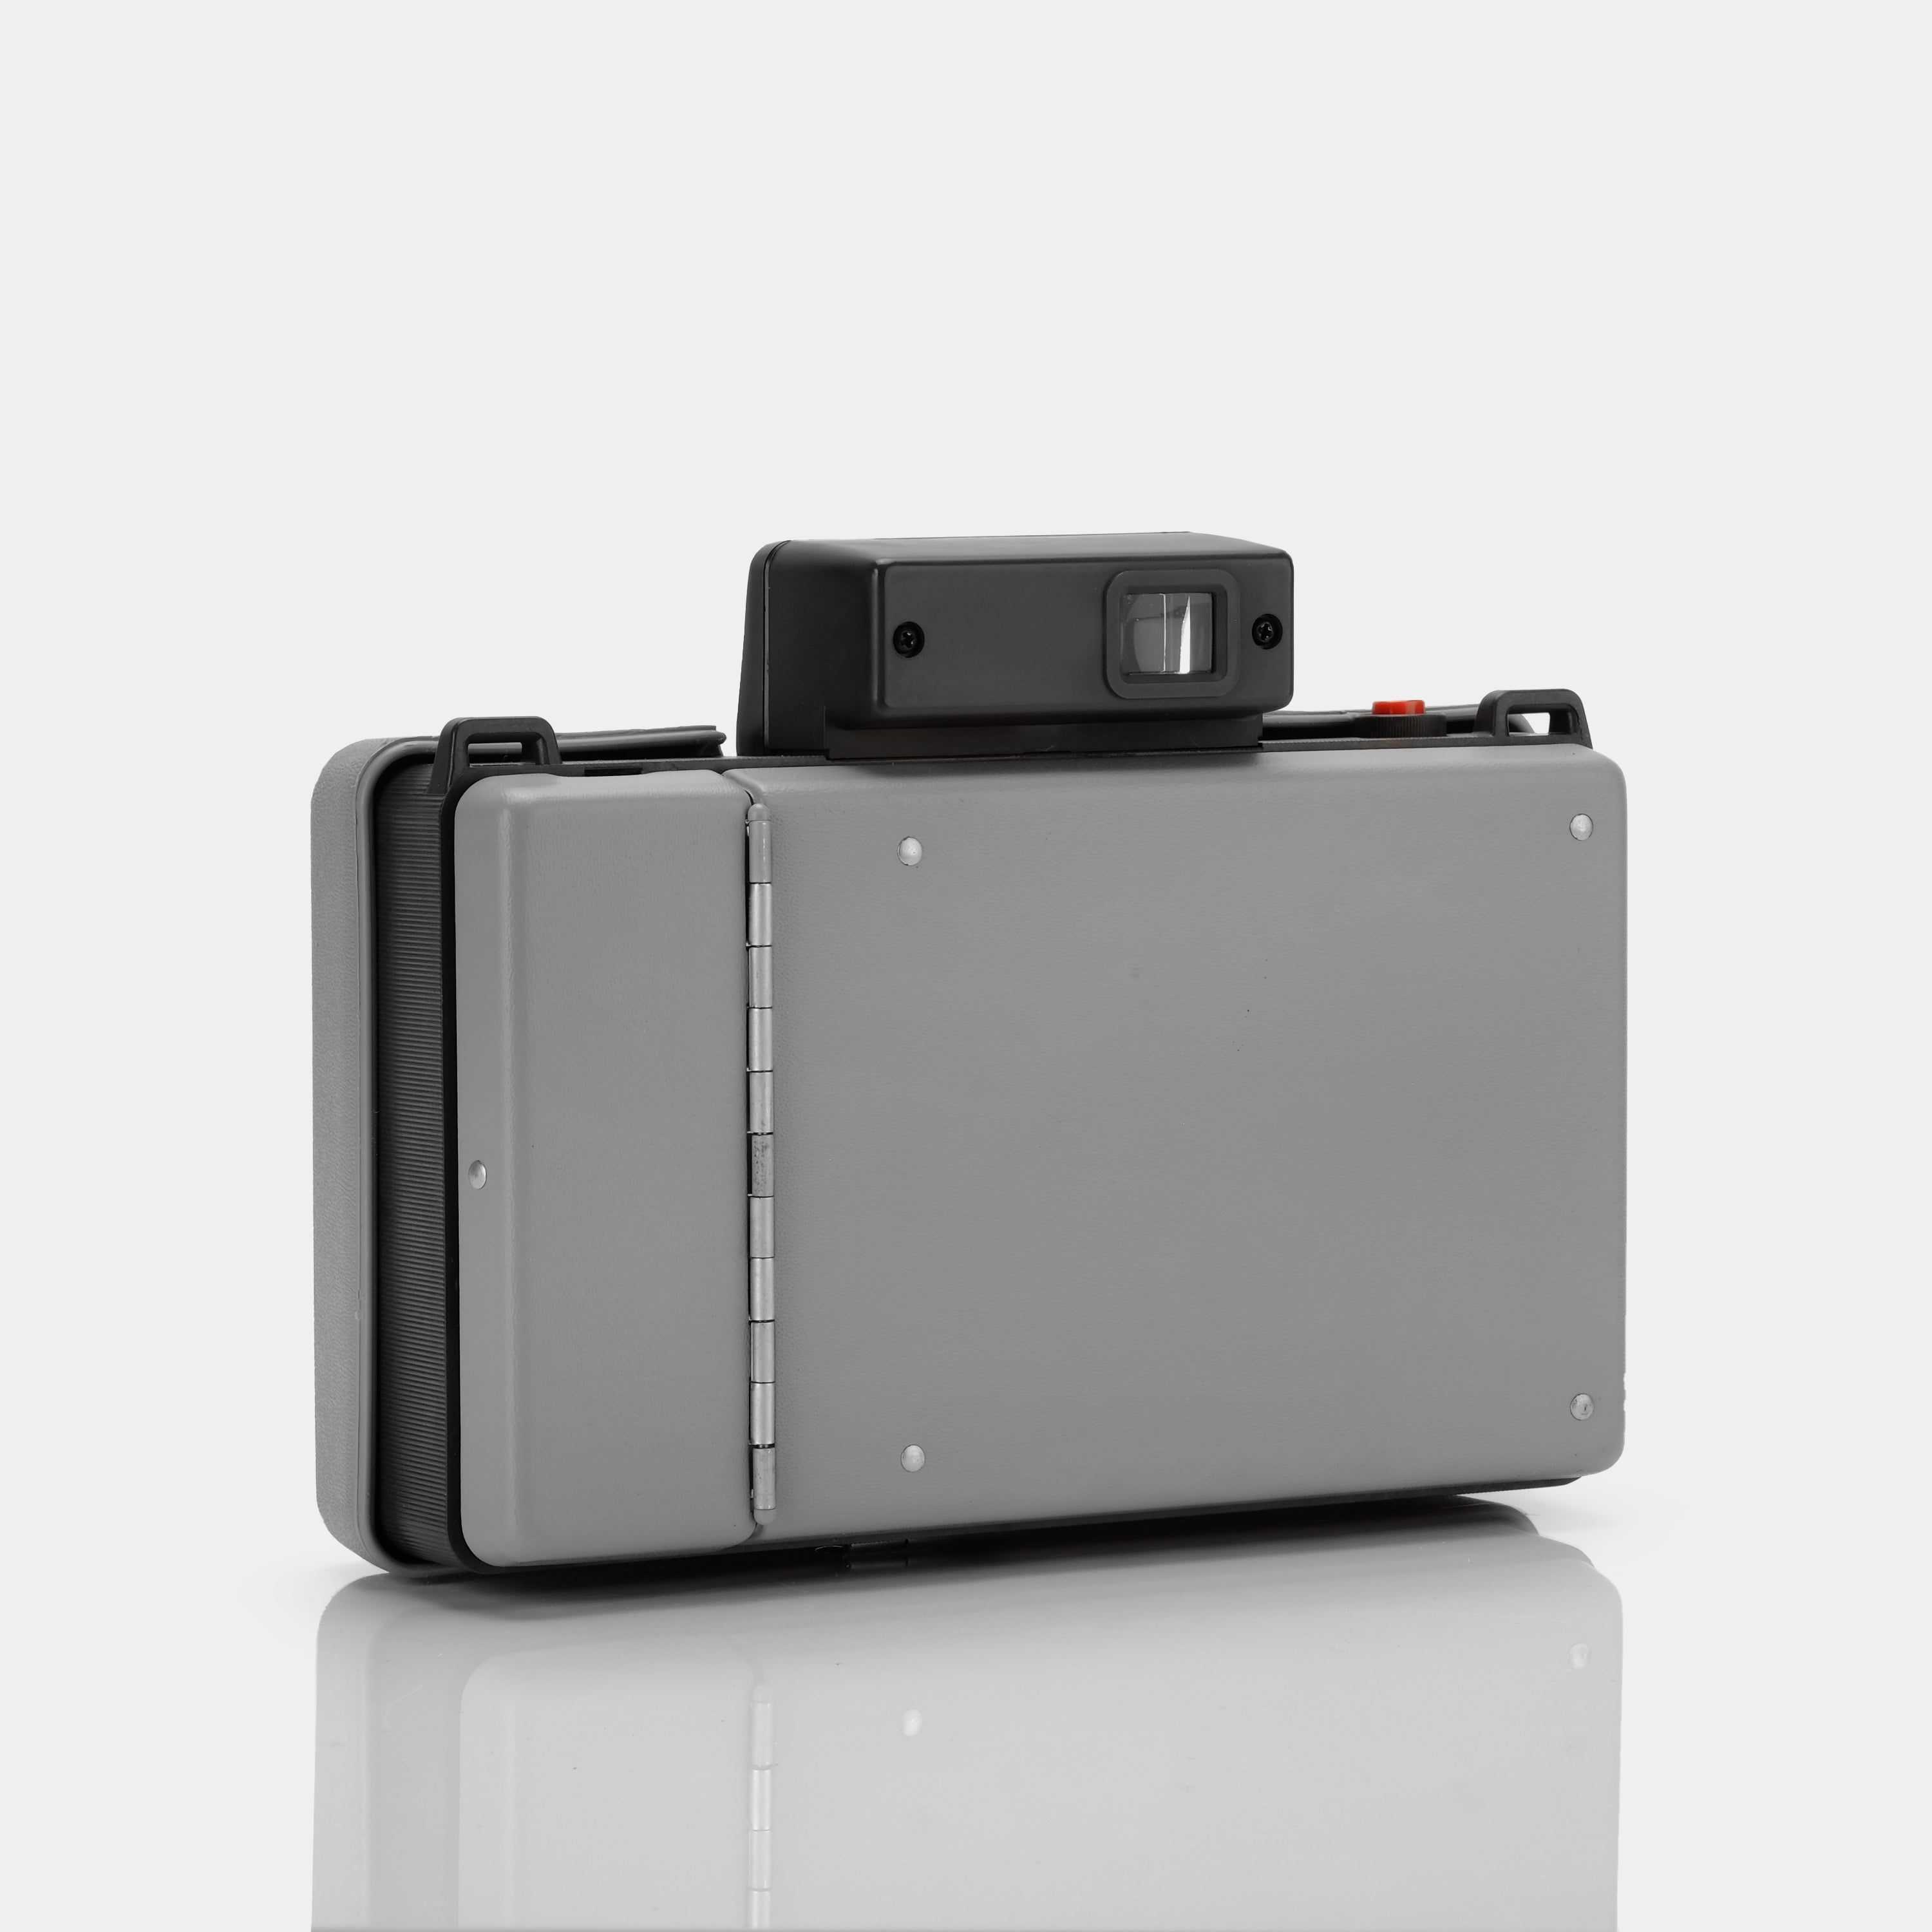 Polaroid Model 215 Packfilm Land Camera